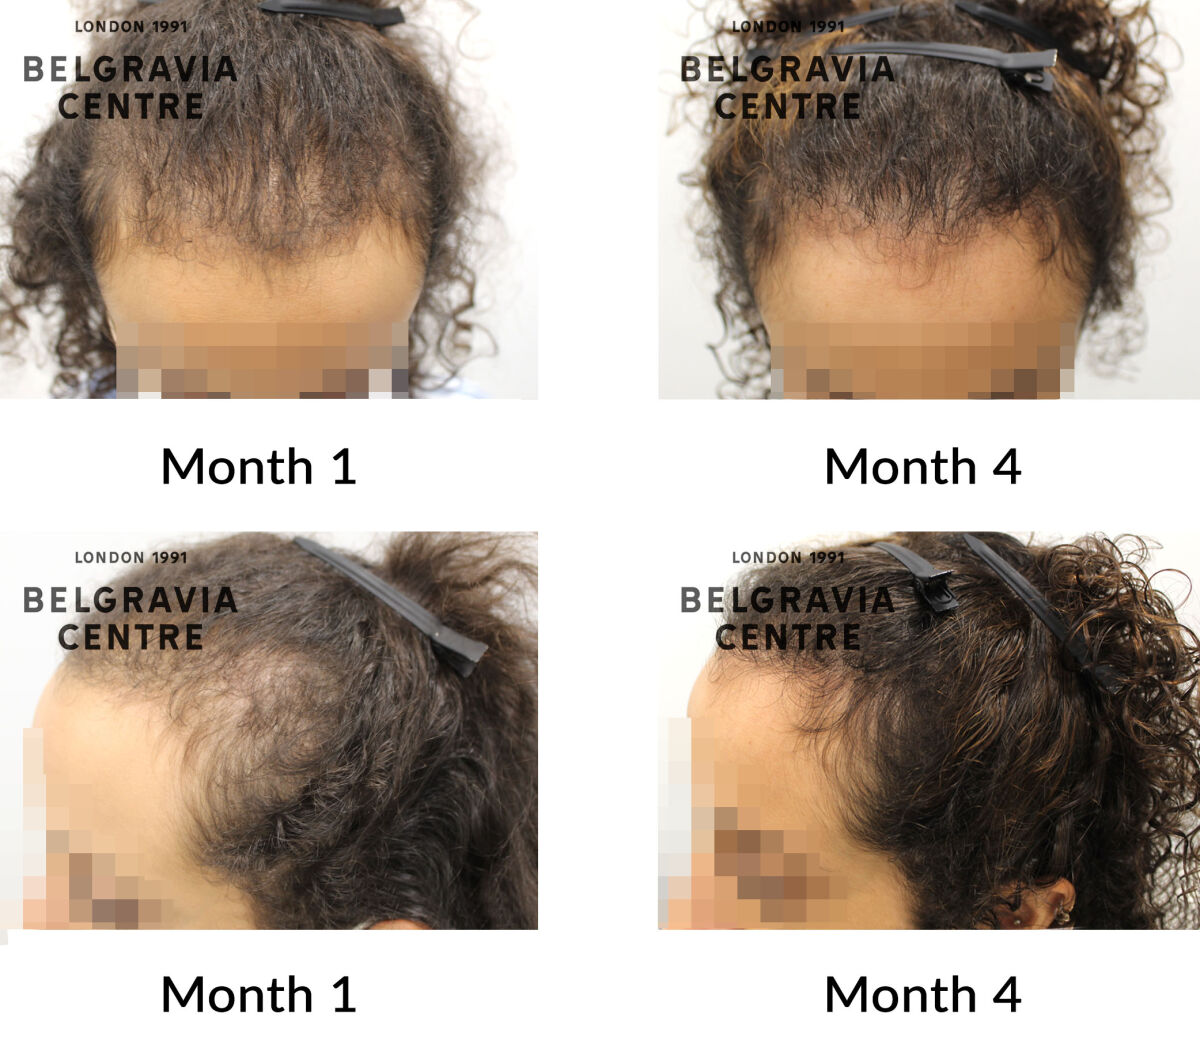 female pattern hair loss the belgravia centre 434016